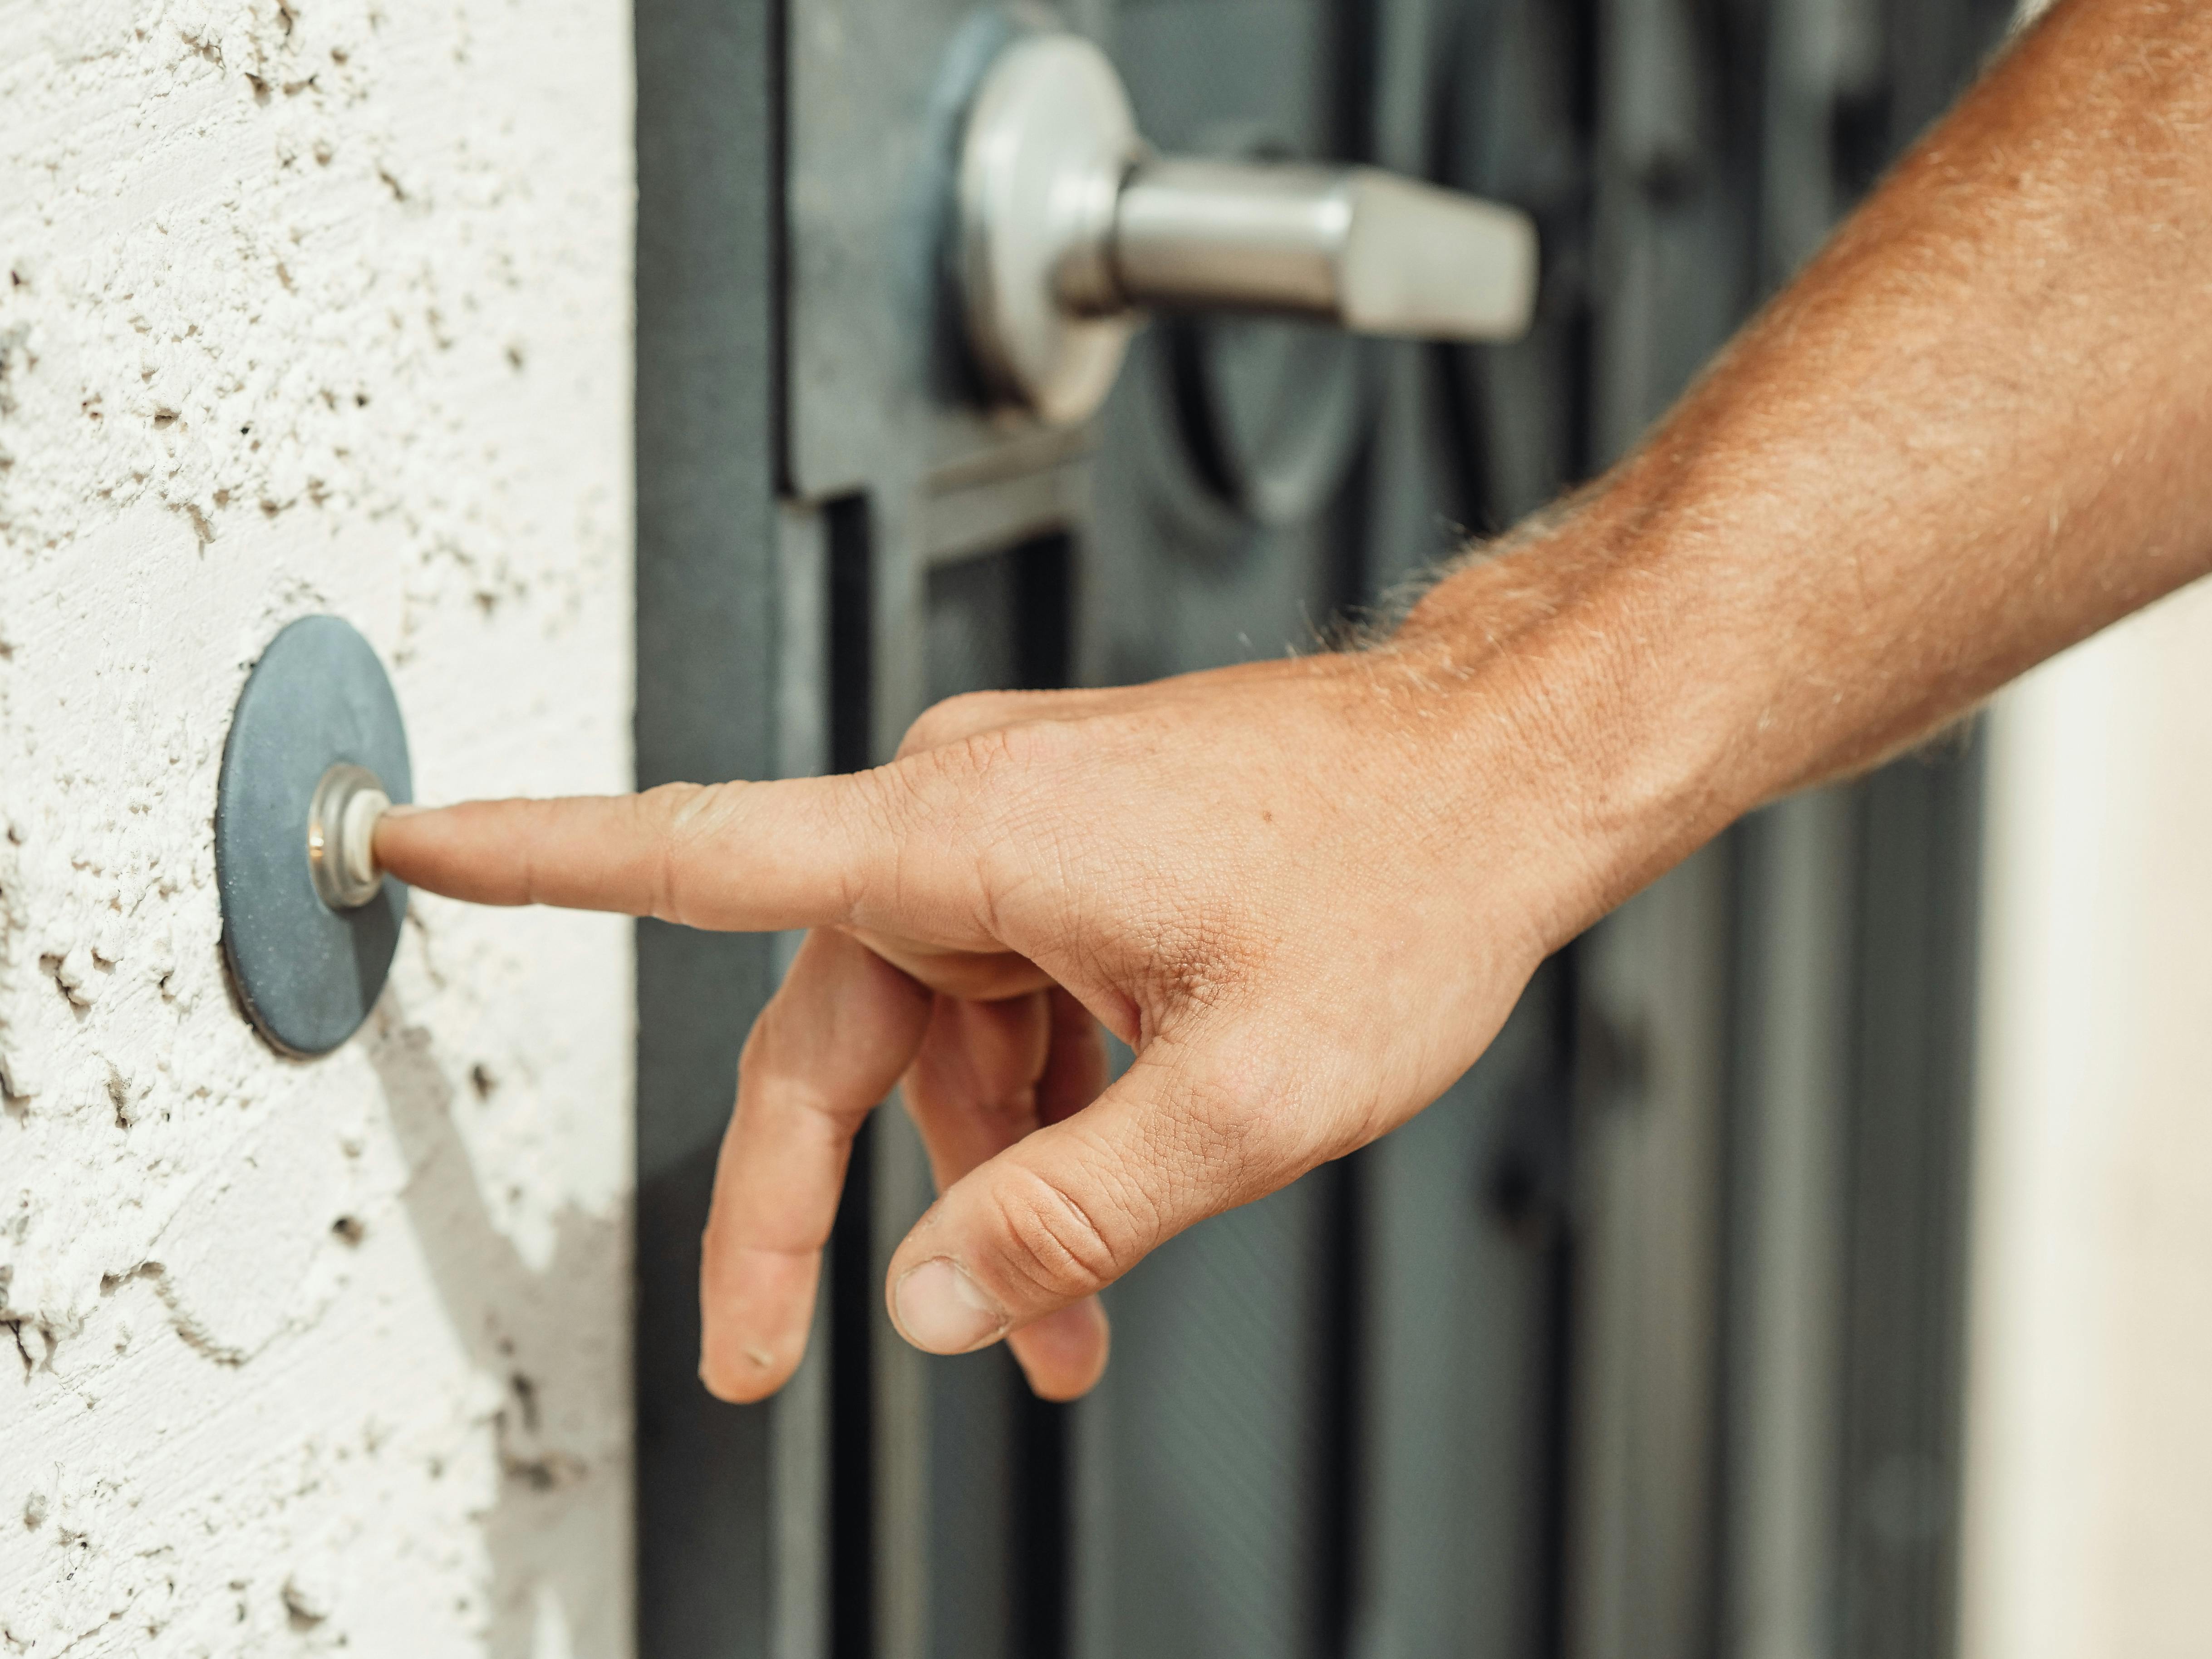 A person ringing a doorbell | Source: Pexels